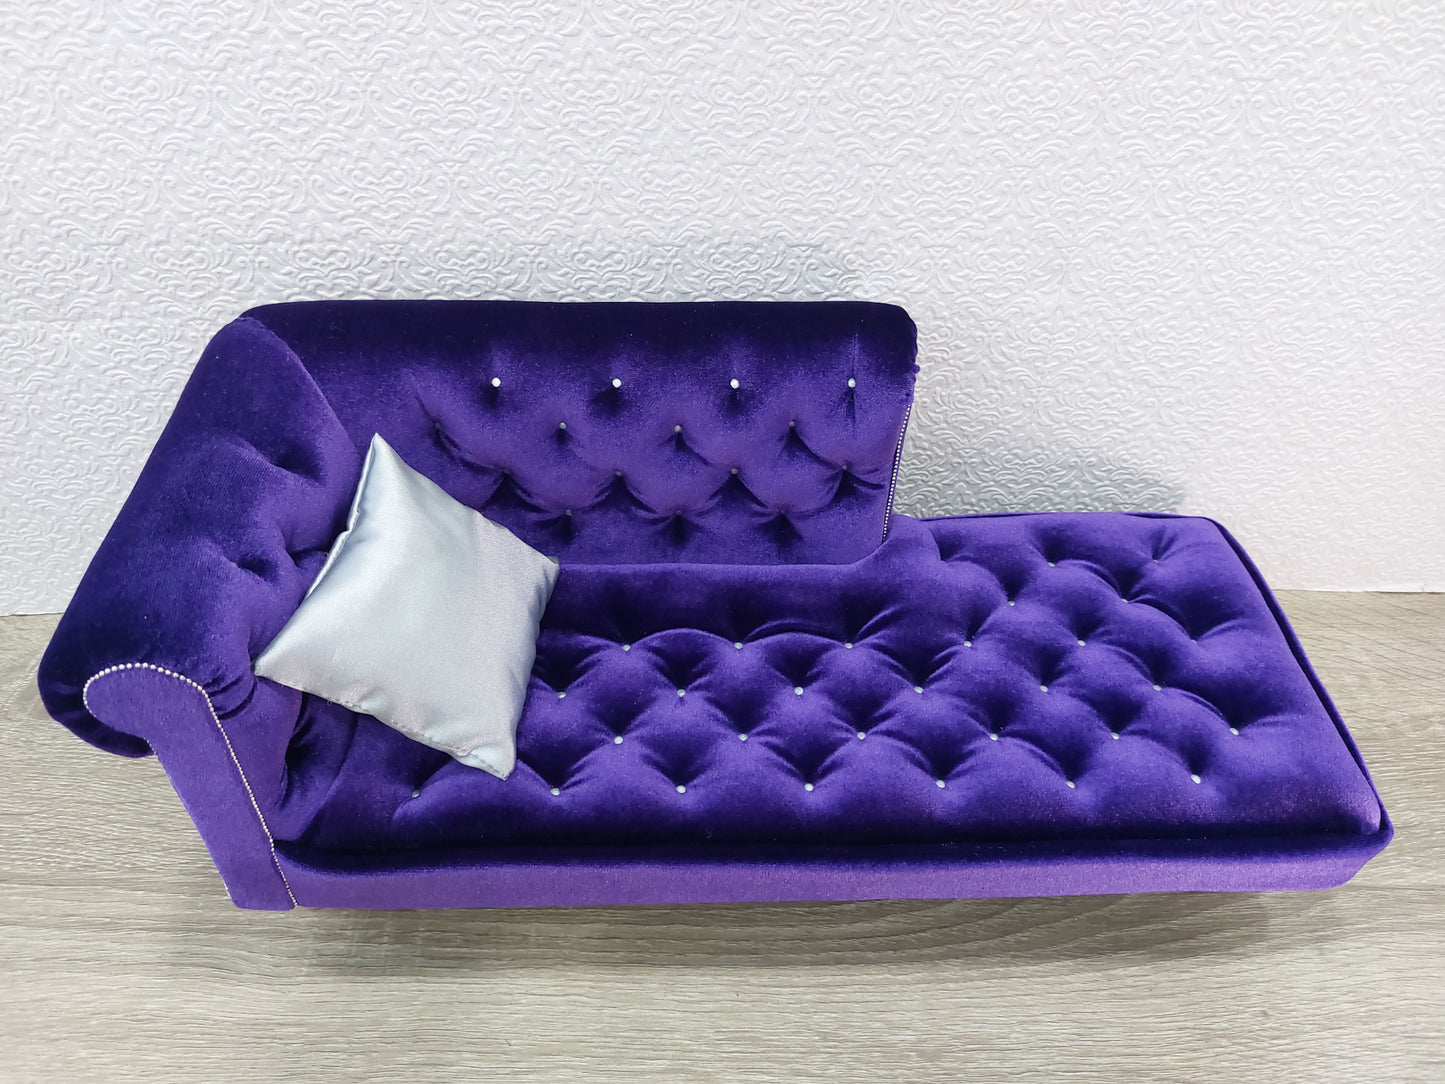 Chesterfield chaise lounge, purple velvet